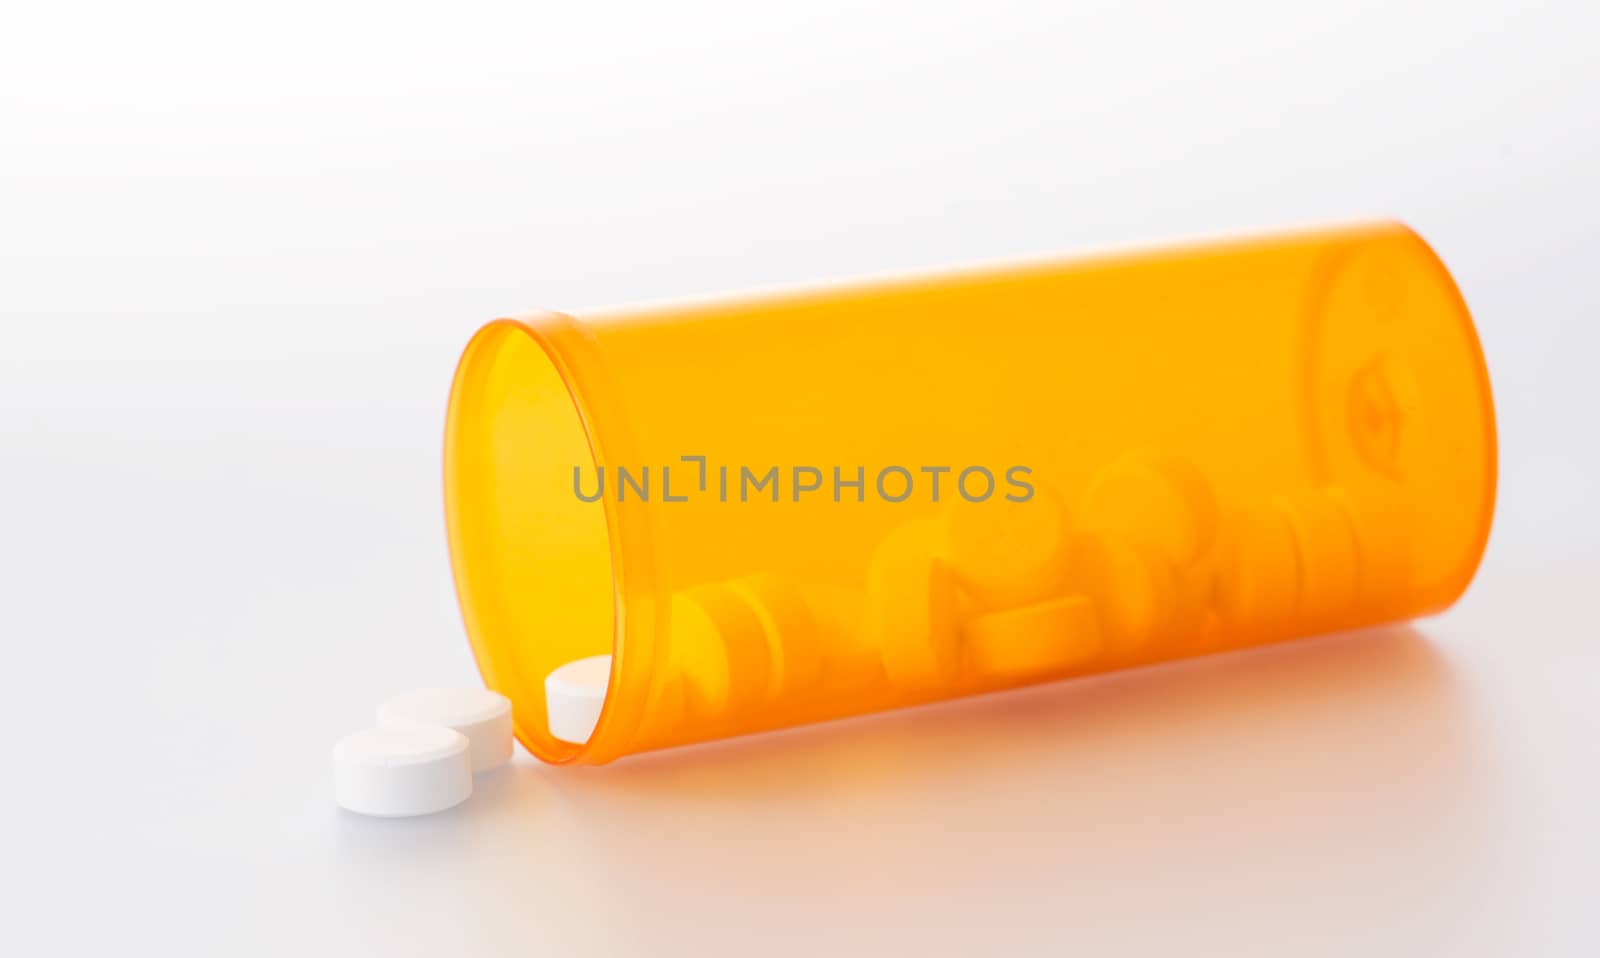 Prescription pills spilling out of bottle